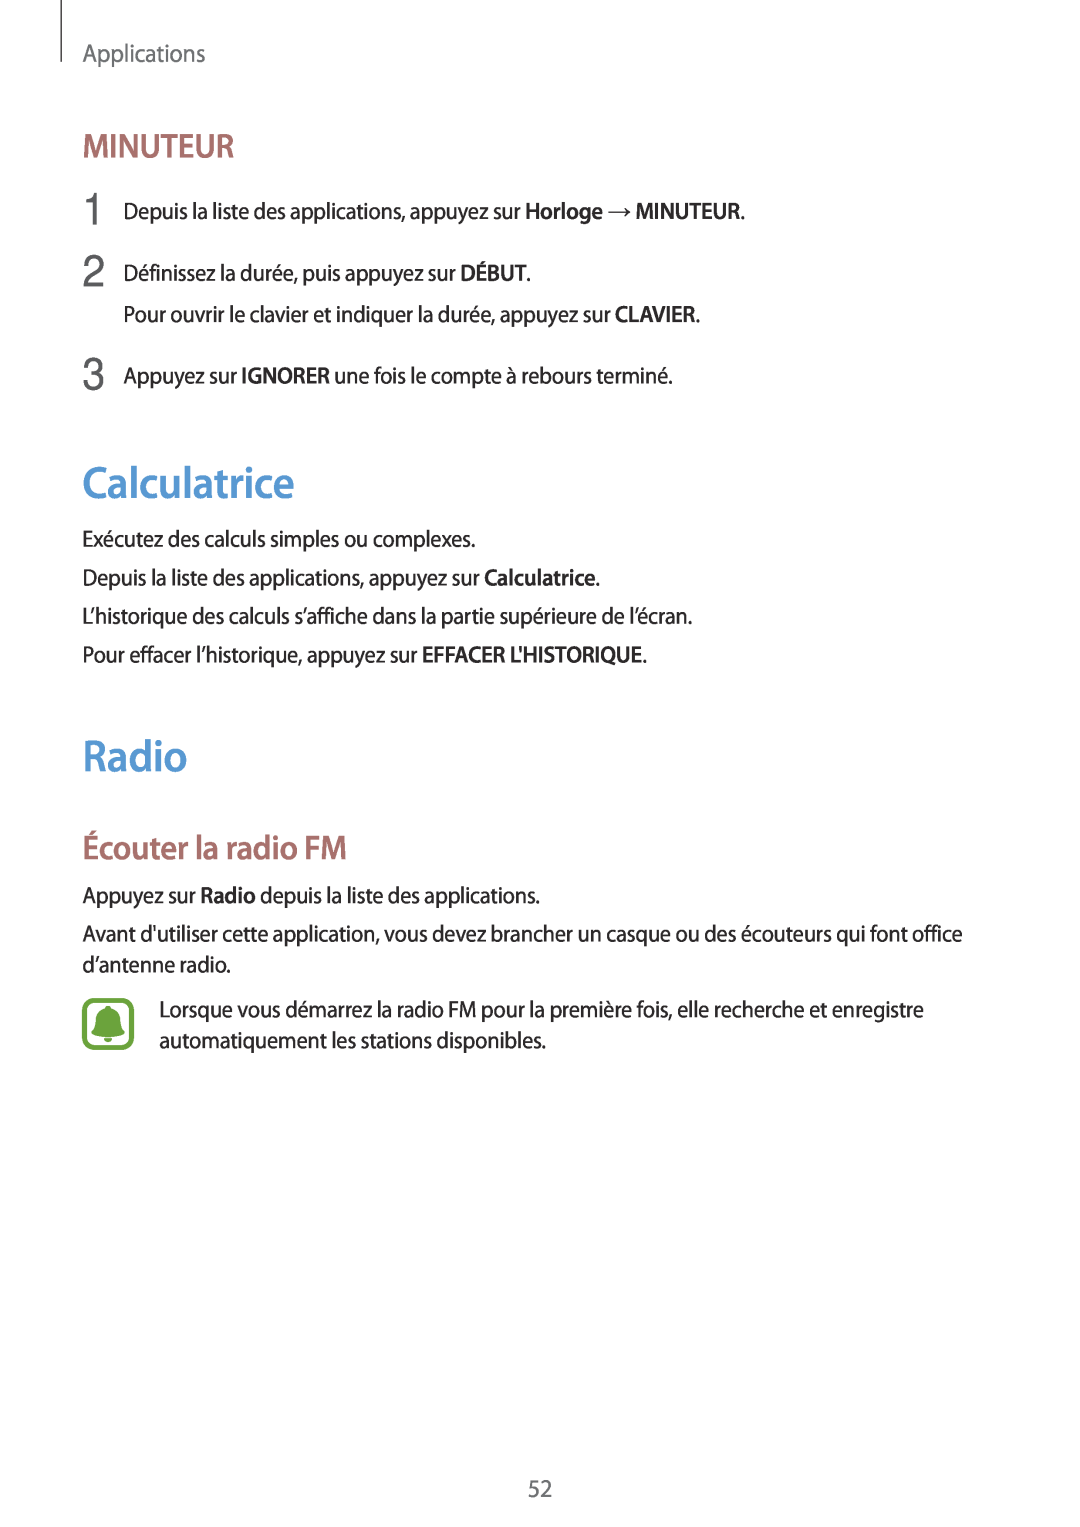 Samsung SM-T280NZKAXEF, SM-T280NZWAXEF manual Calculatrice, Radio, Minuteur, Écouter la radio FM, Applications 